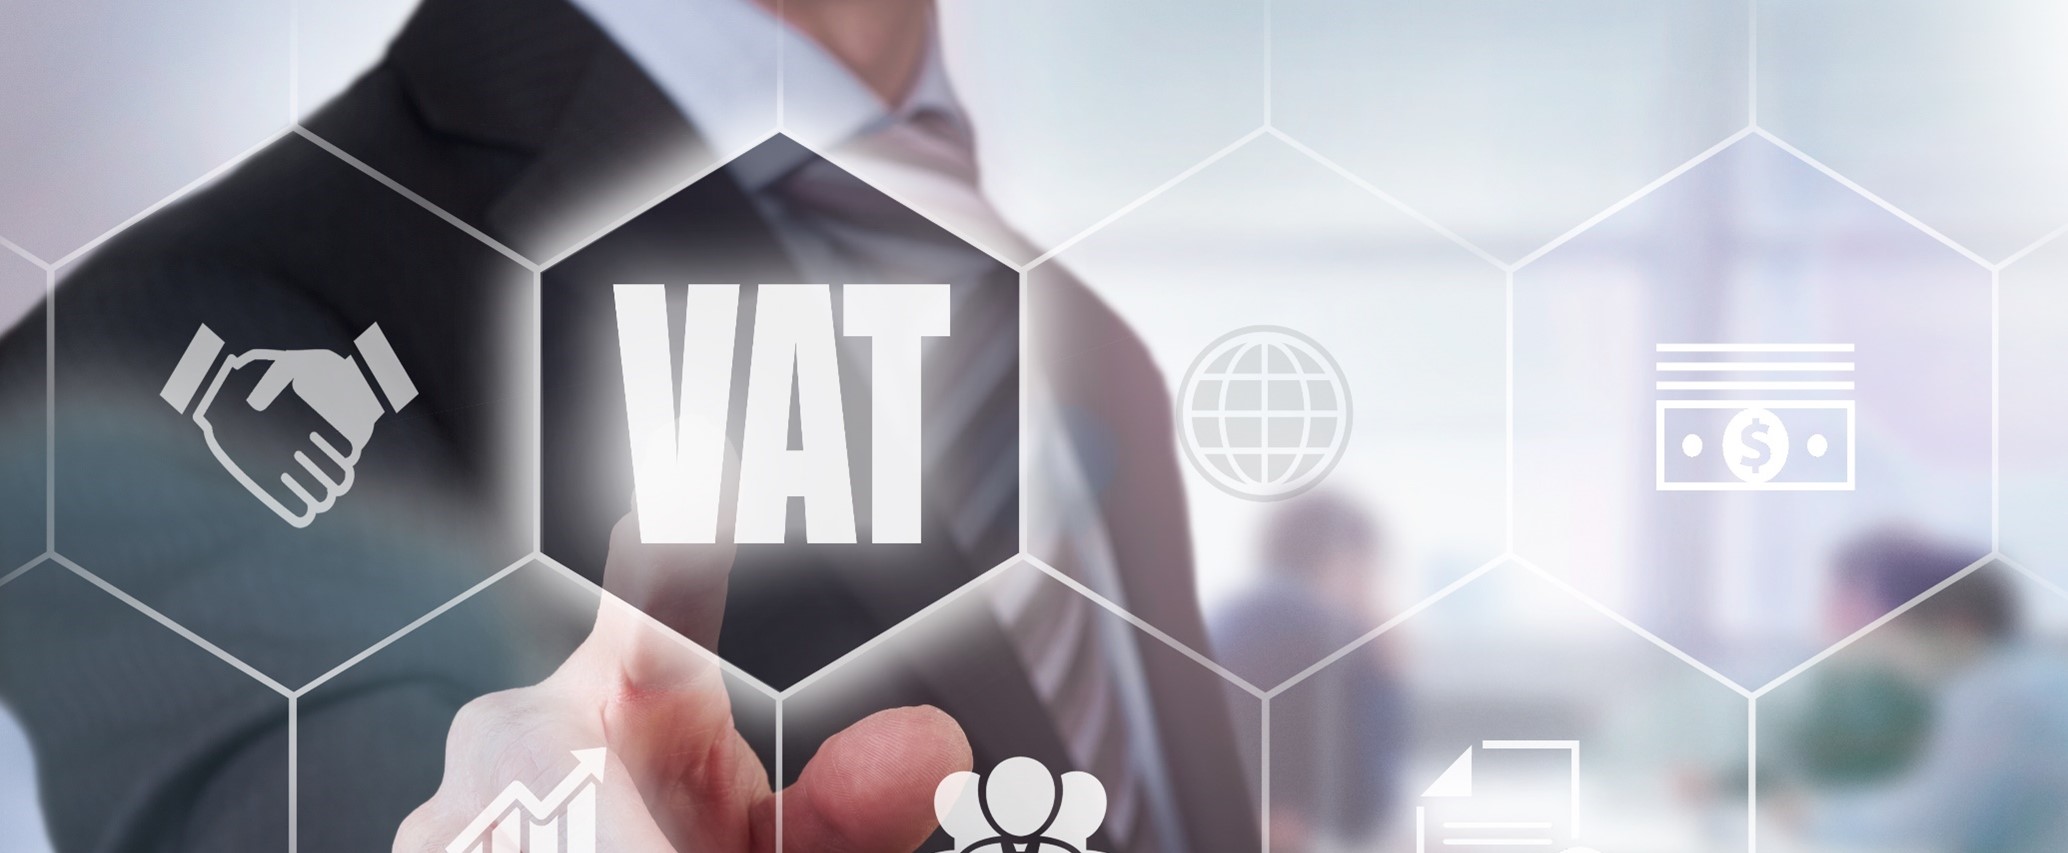 VAT Review Webinar